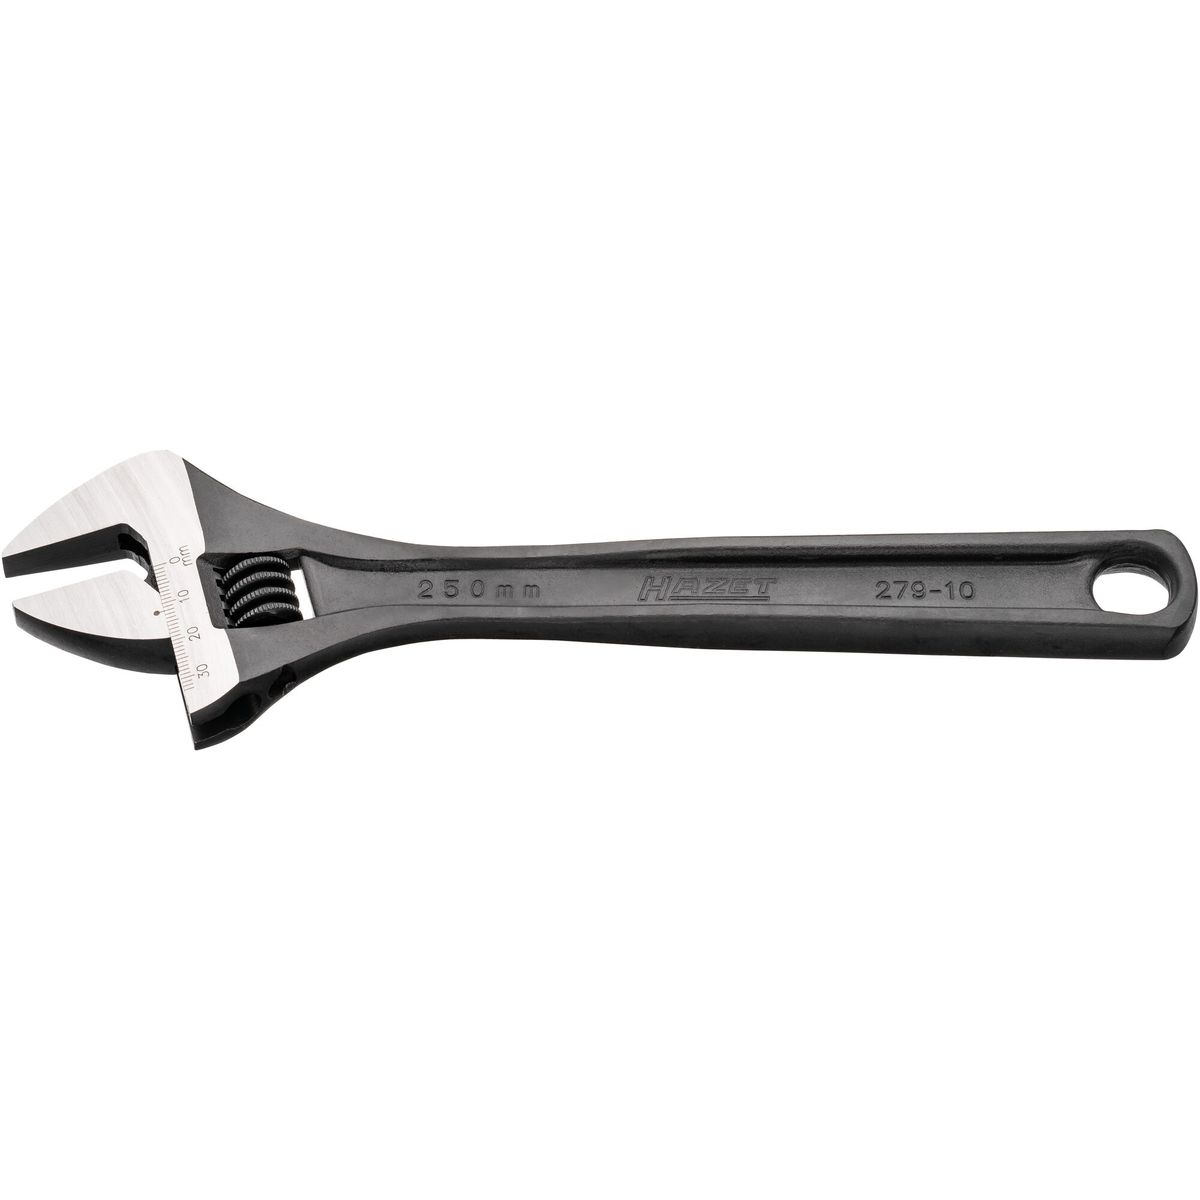 Adjustable Wrench No.279-10 Hazet®